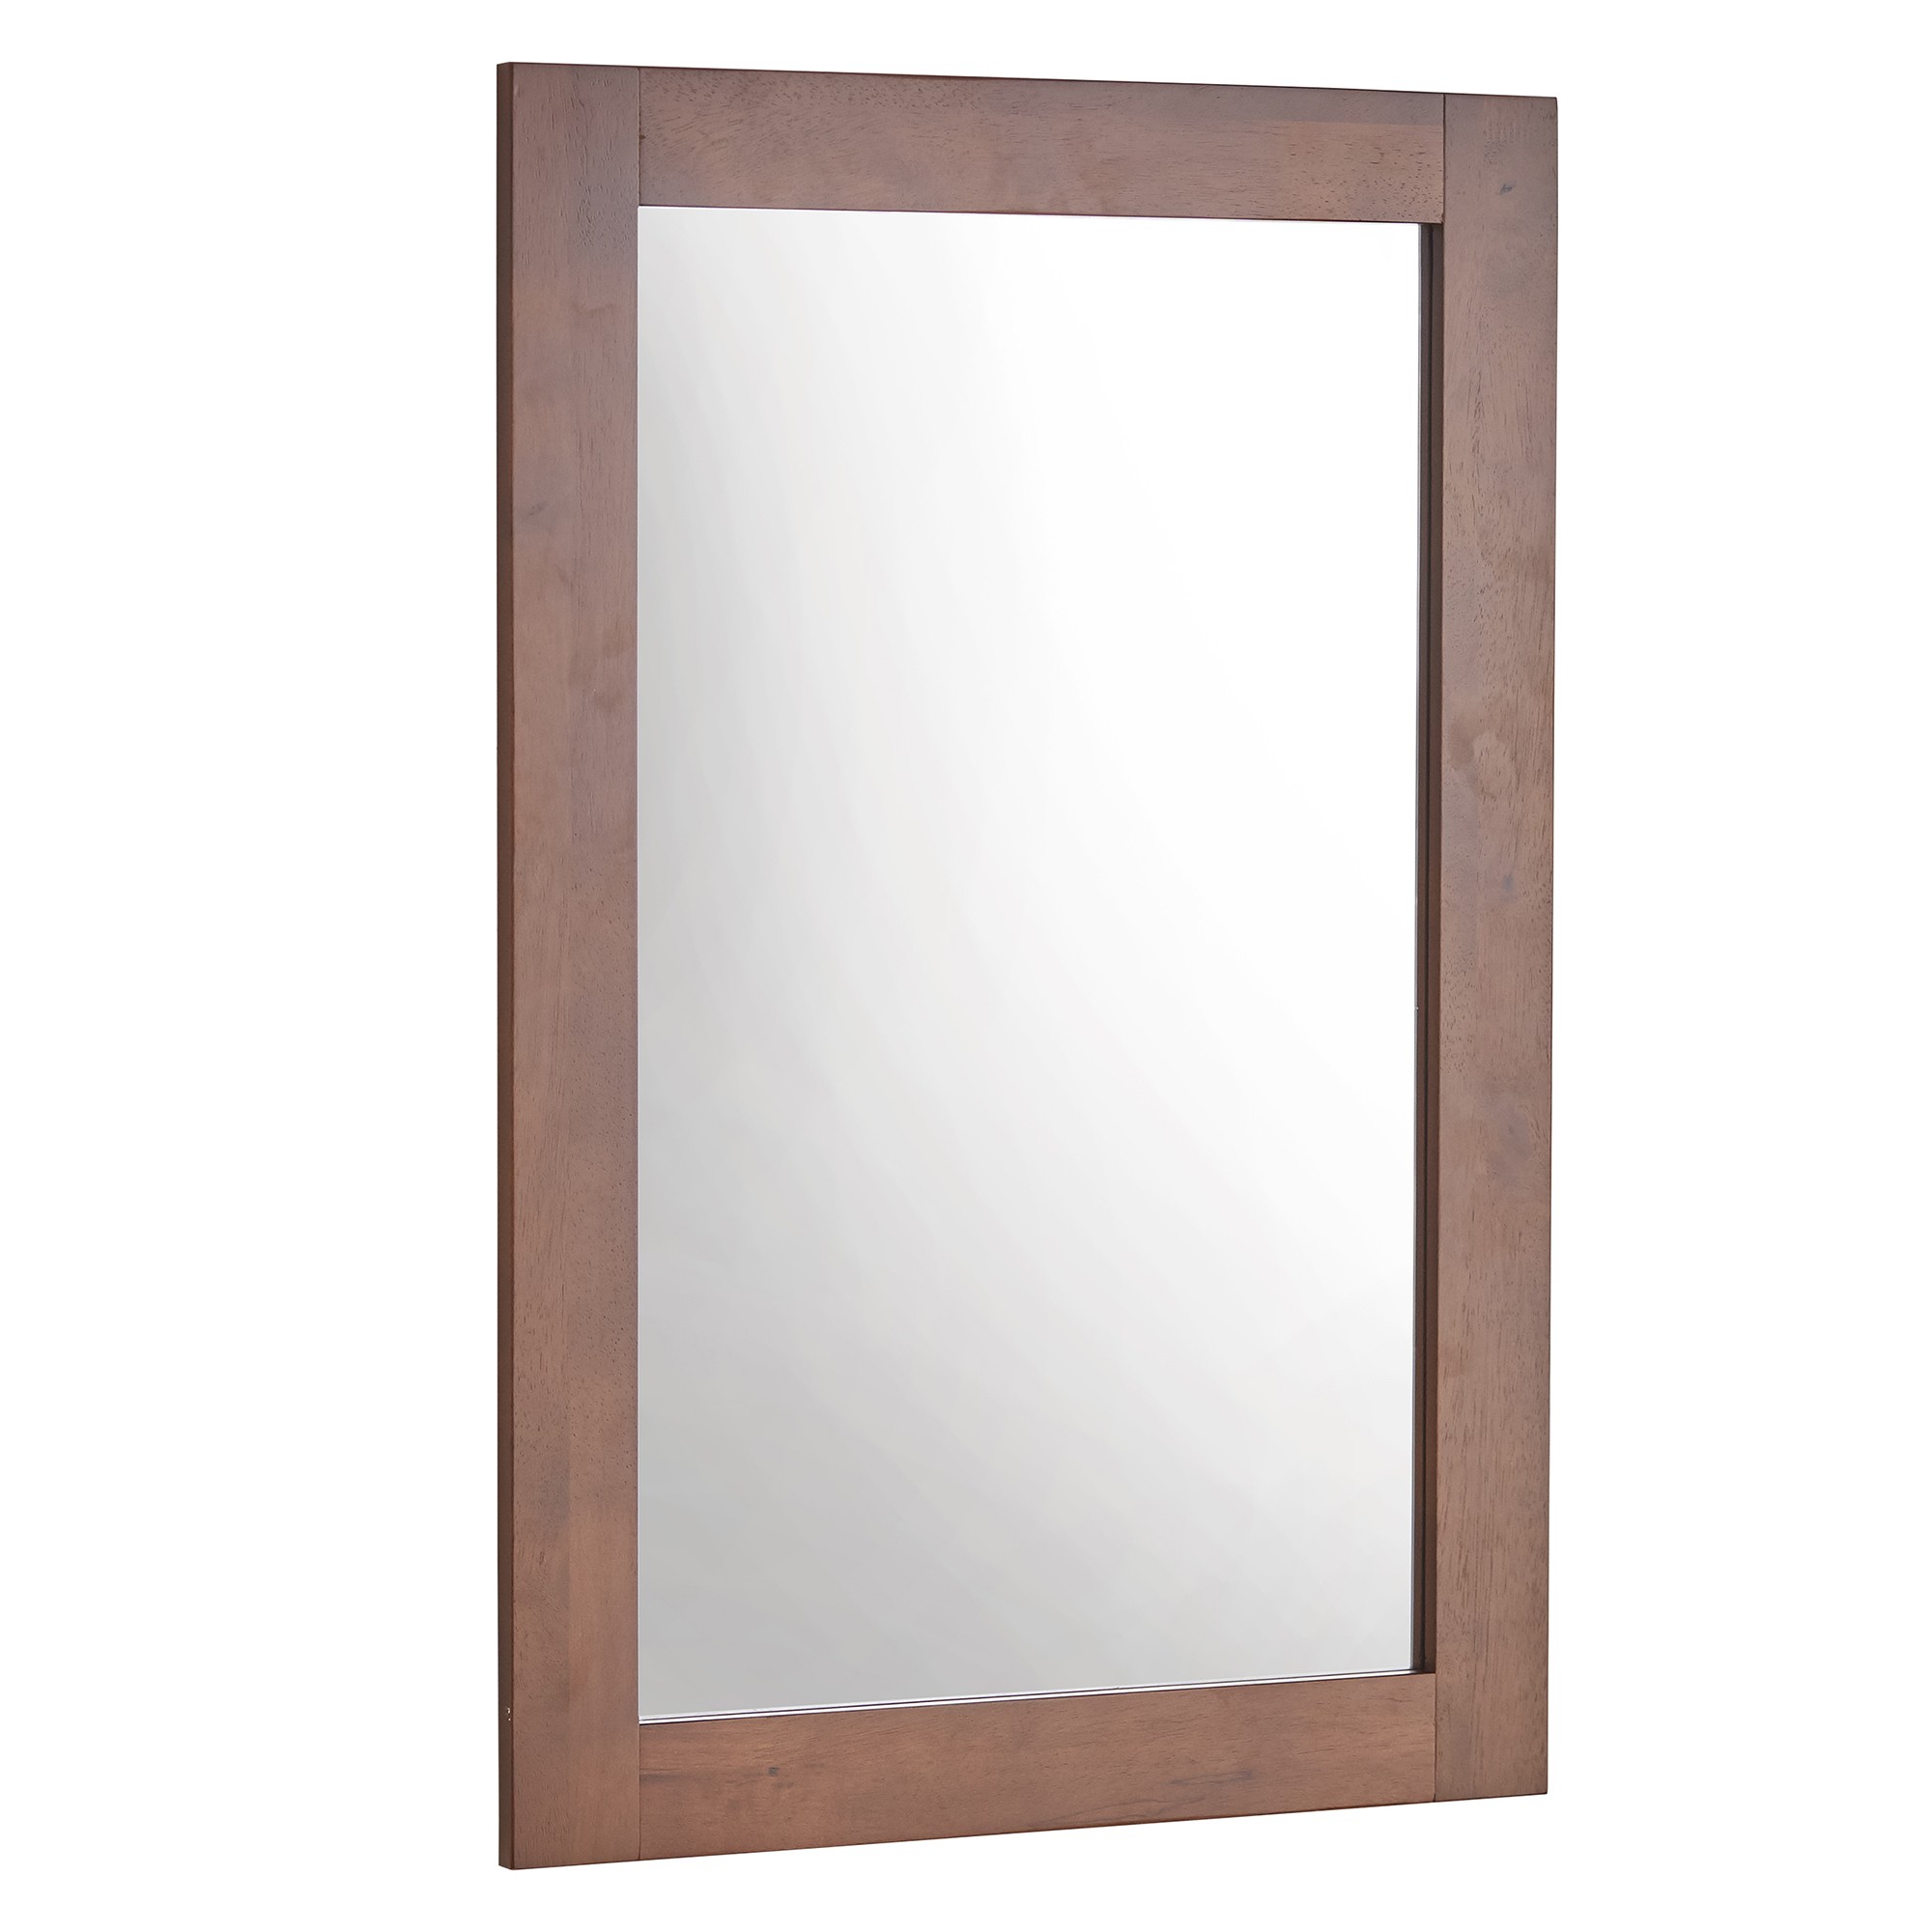 Rustic Brown Rectangular Wall Mirror